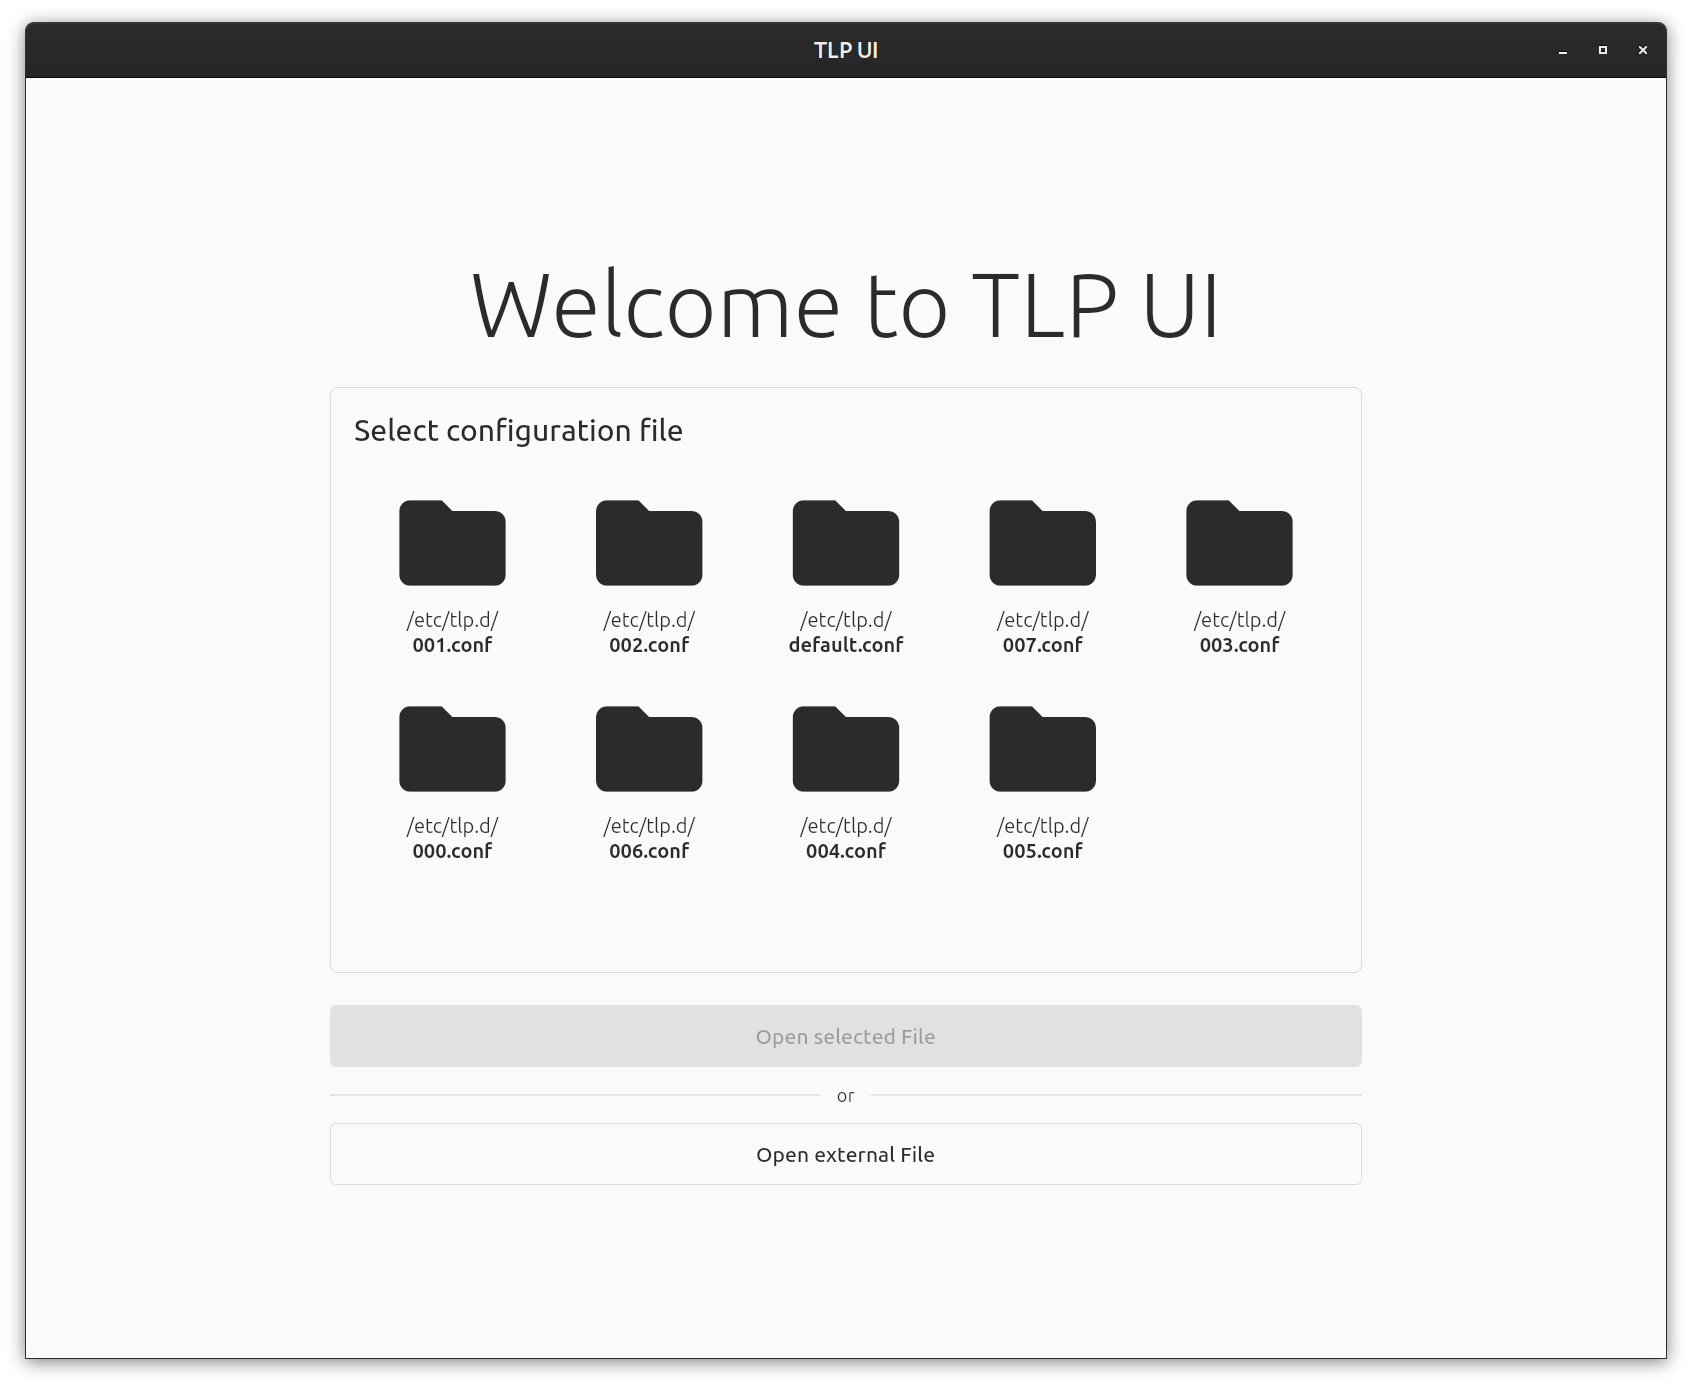 TLP UI welcome screenshot